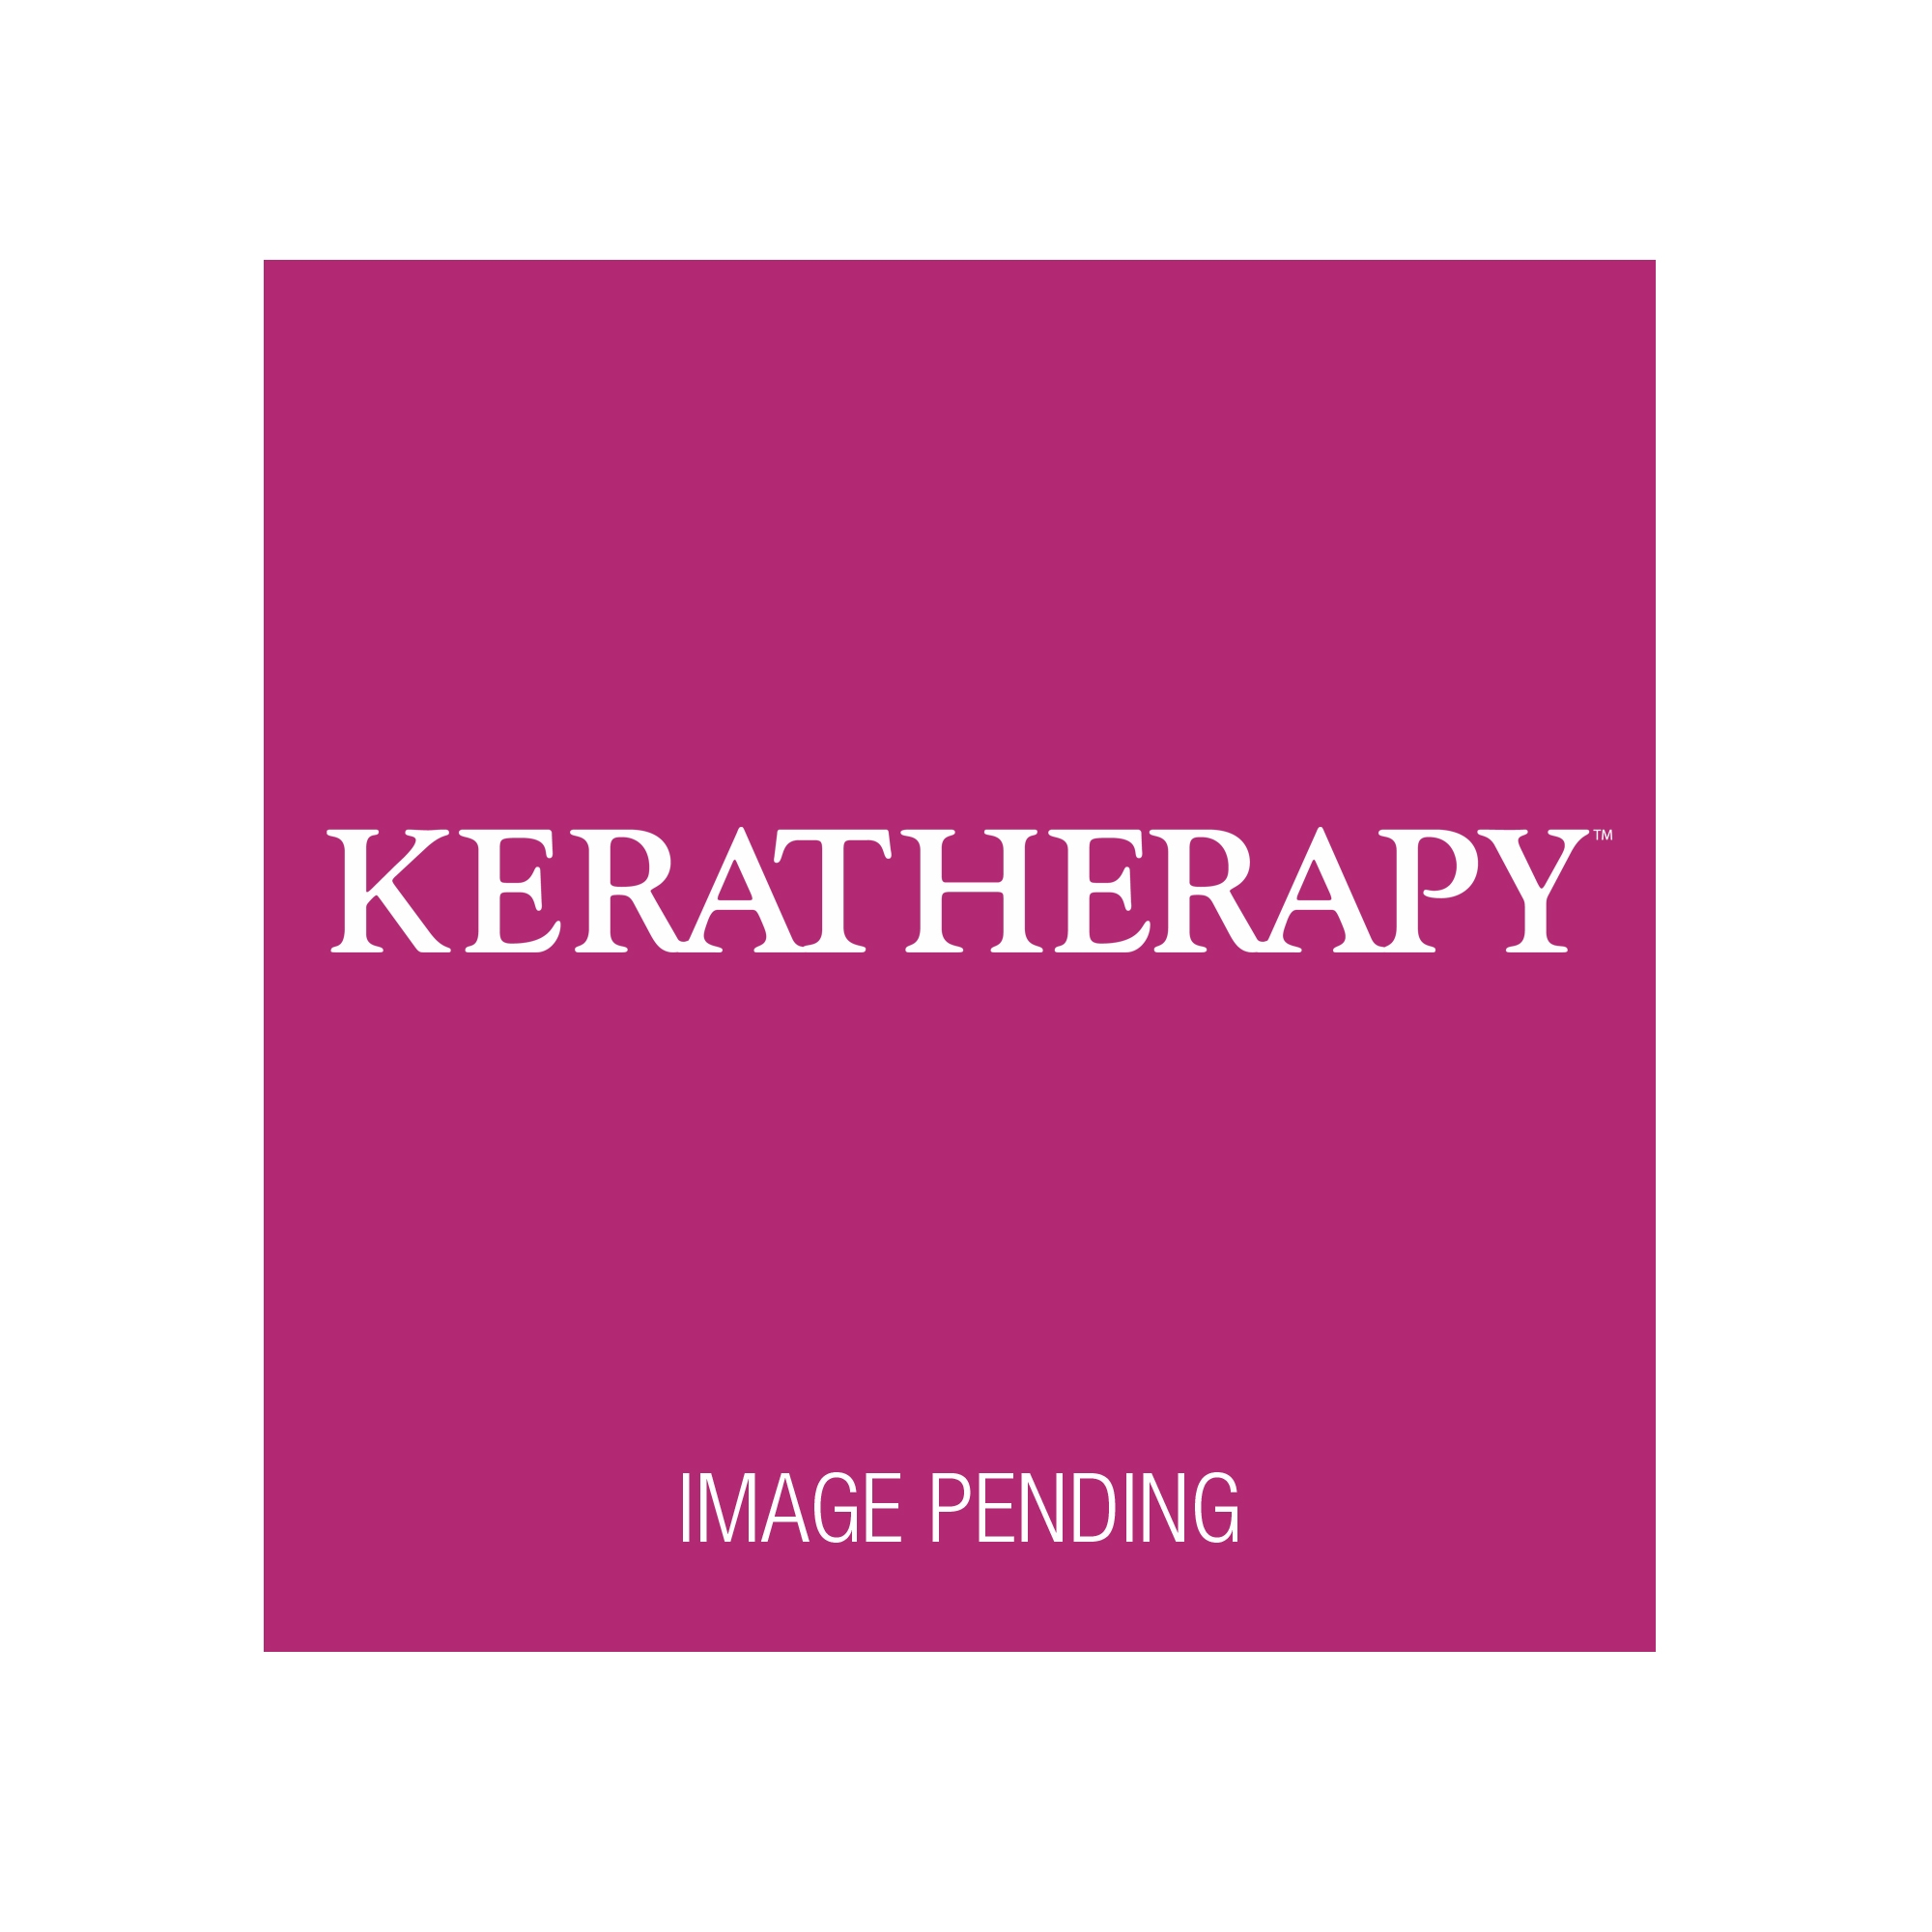 Keratherapy XTRAS: Clear White Liter Pump